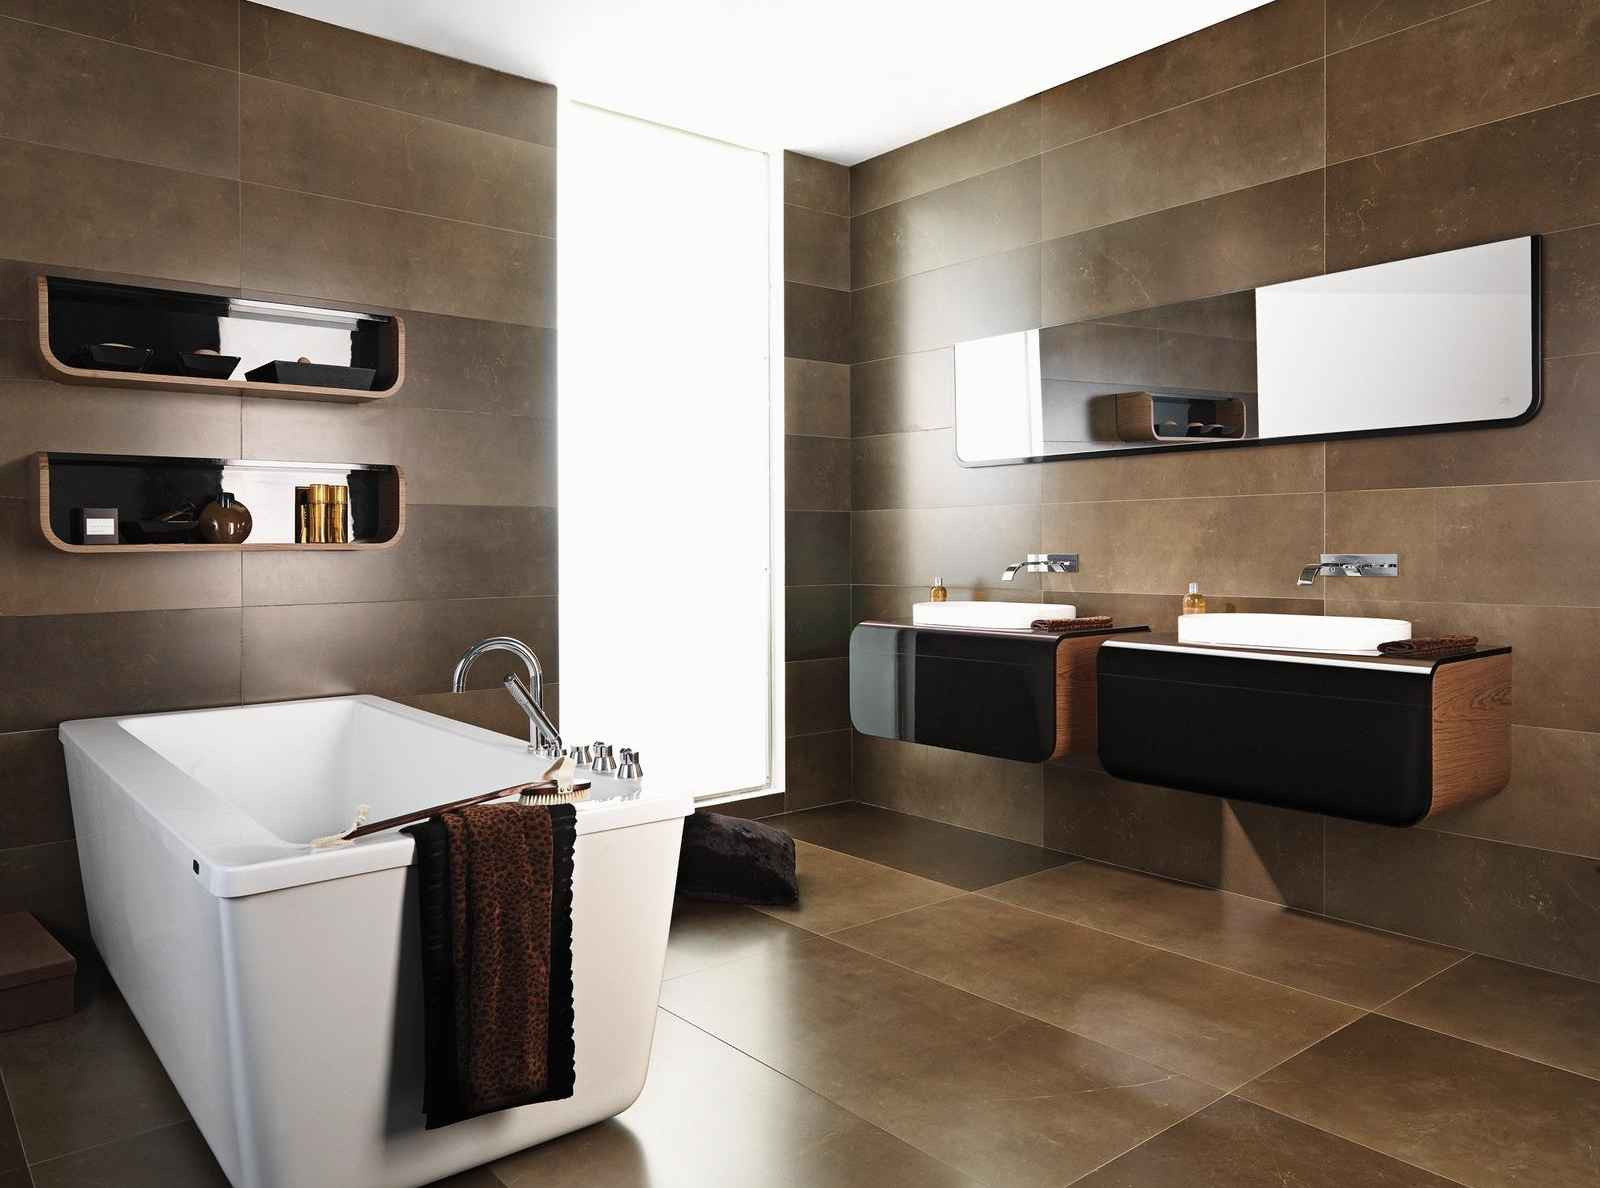 Glass Tile Bathroom Floor
 Porcelain Tile Flooring Benefits